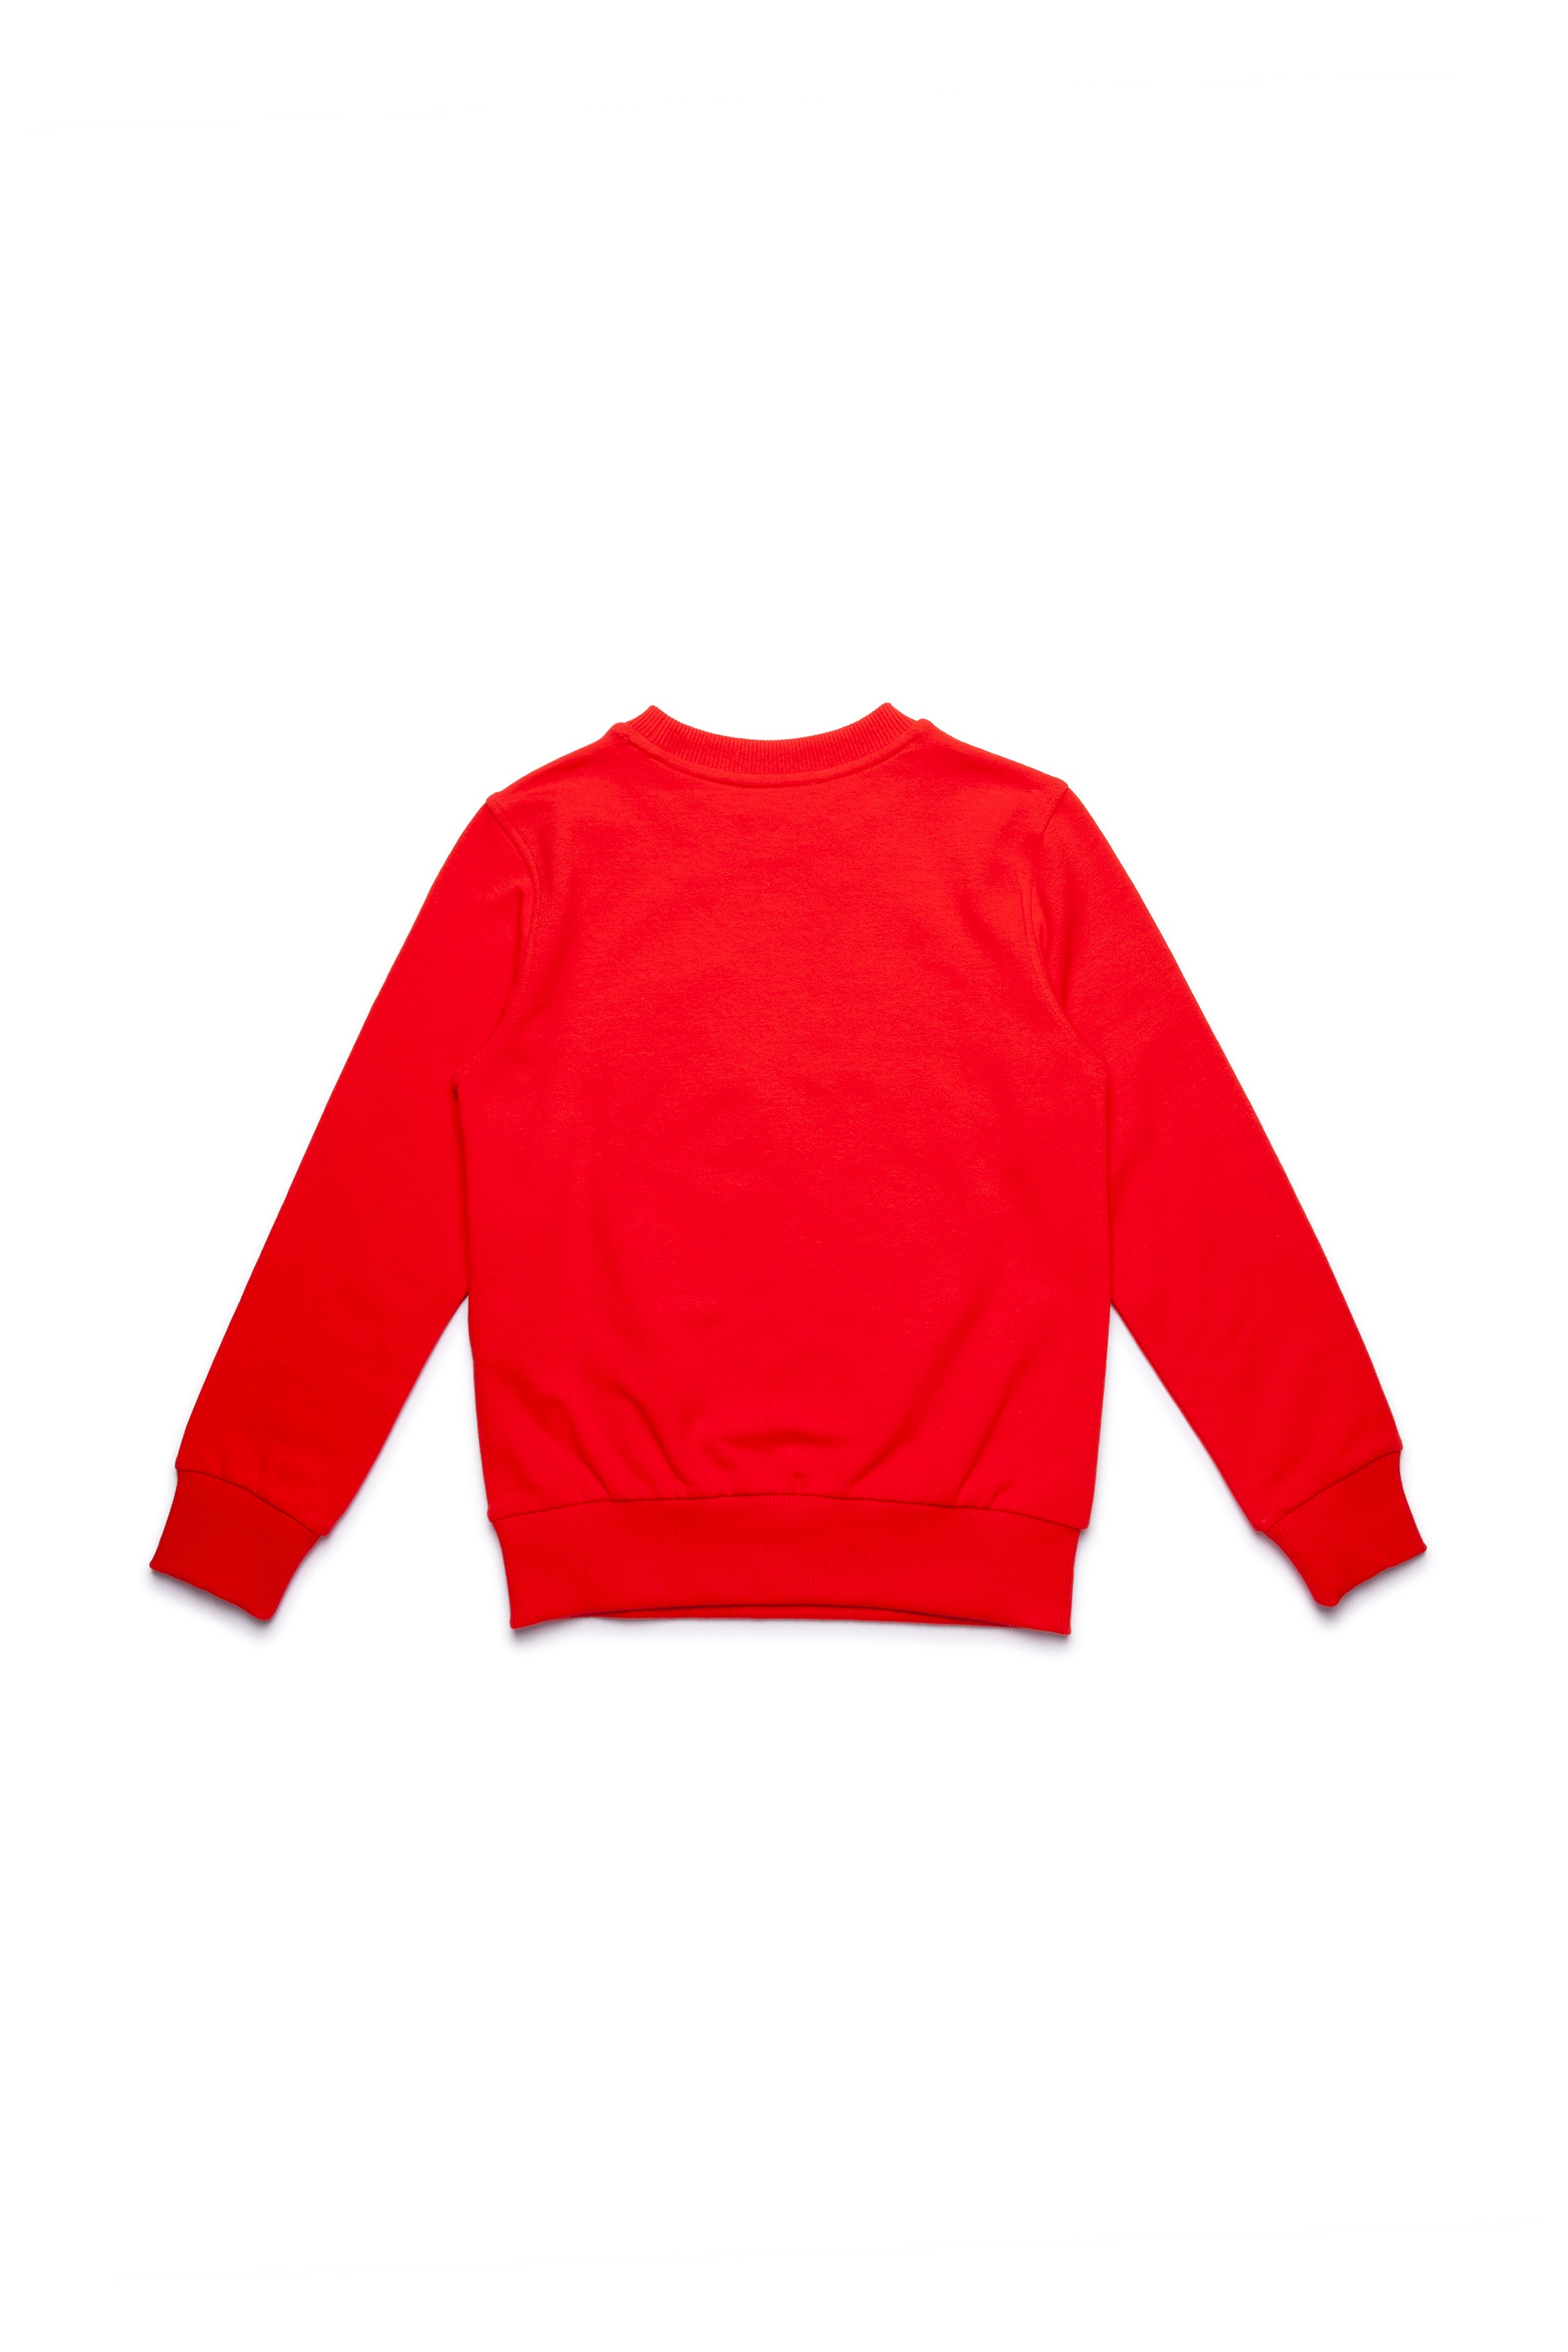 Boys & Girls Red Printing Toy Cotton Sweatshirt